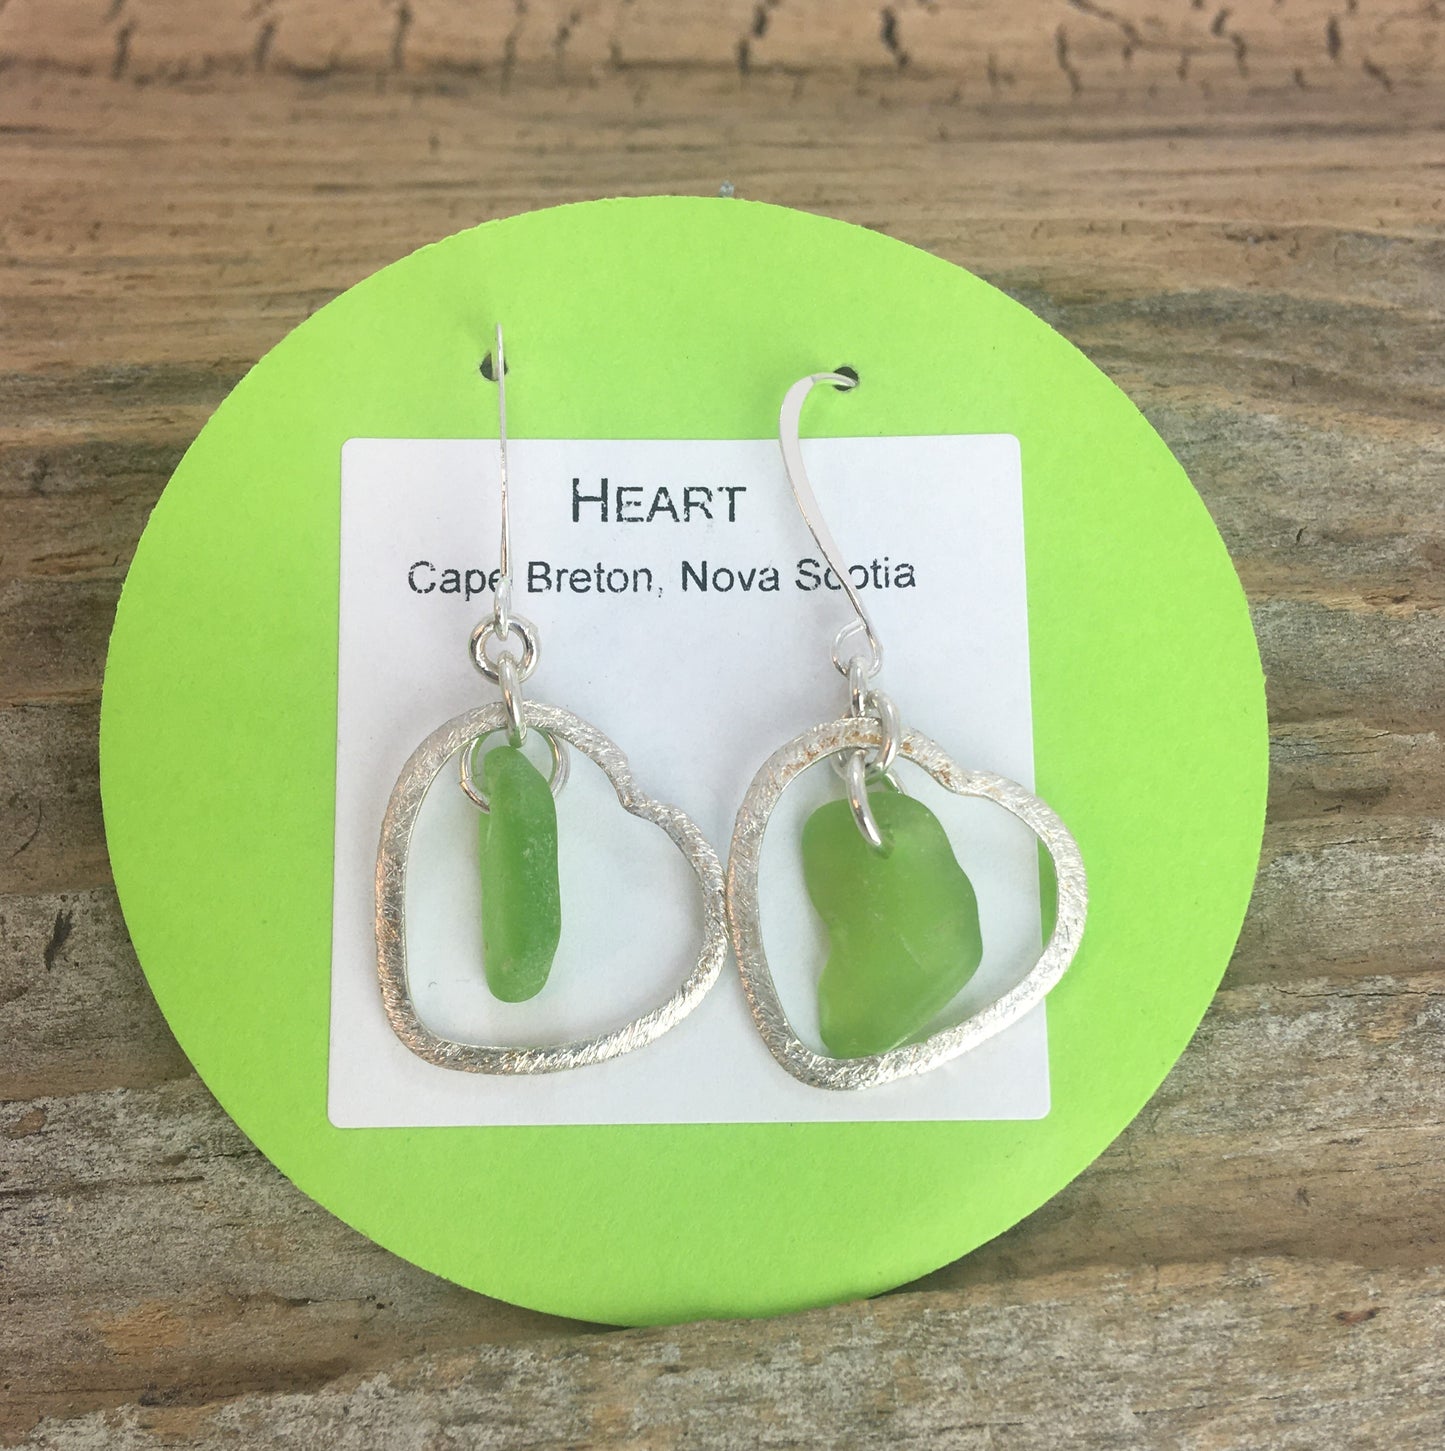 Heart Earrings - Green Sea Glass from Cape Breton, Nova Scotia, Canada and Sterling Silver